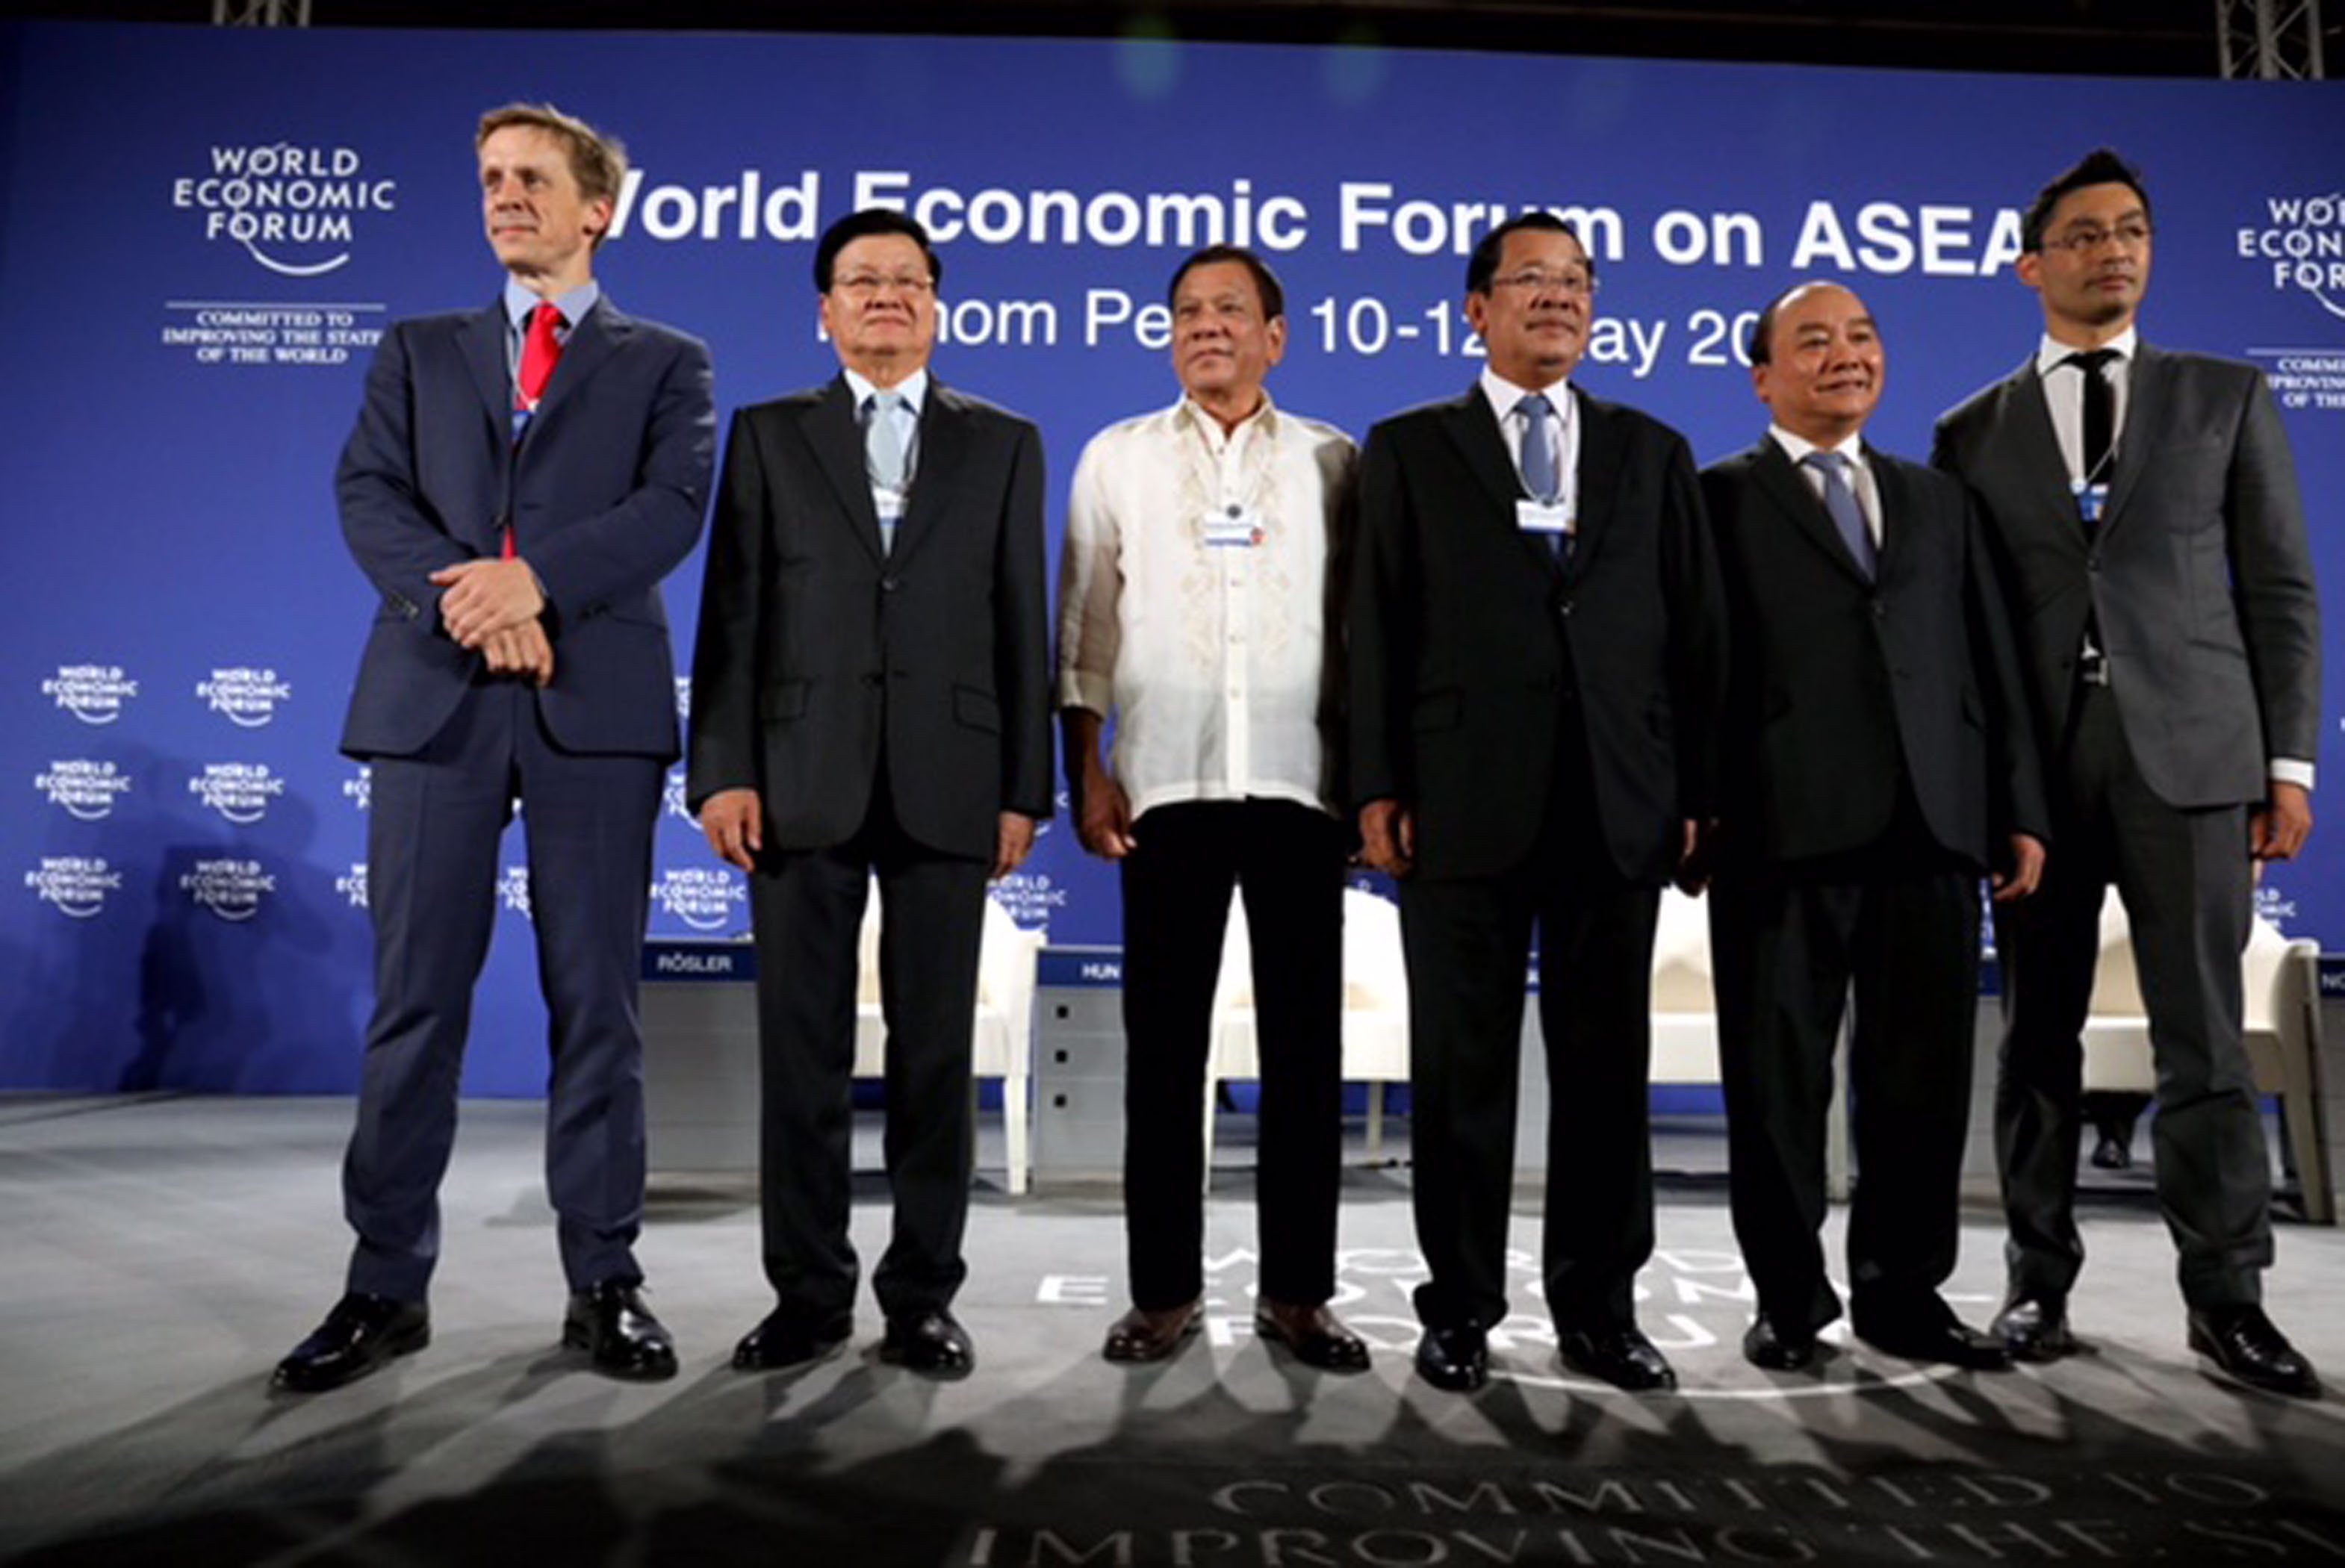 President Rodrigo Duterte attends World Economic Forum on ASEAN 2017